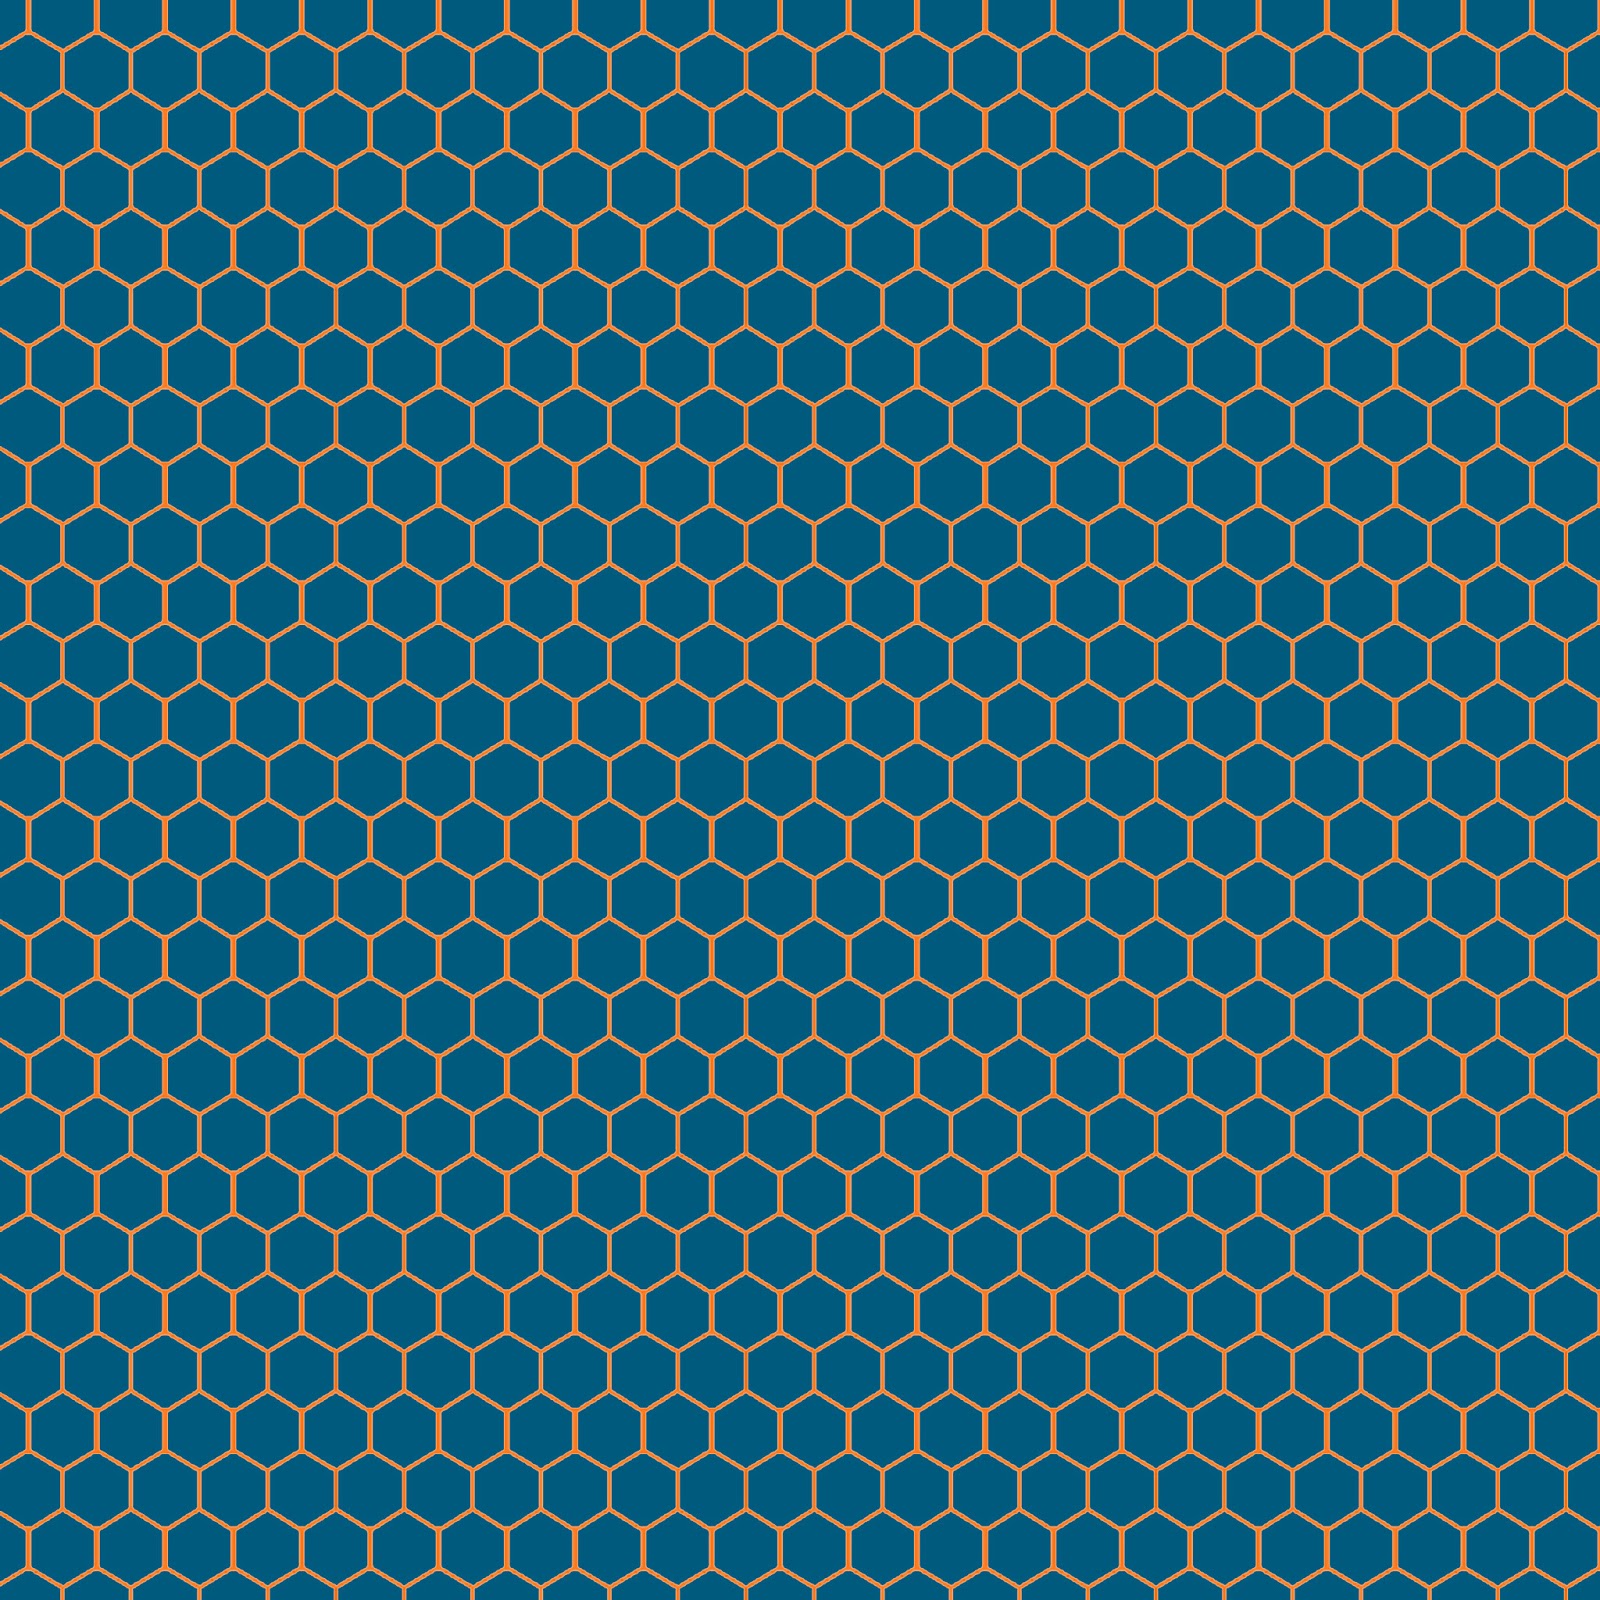 Blue Hexagon Honeycomb